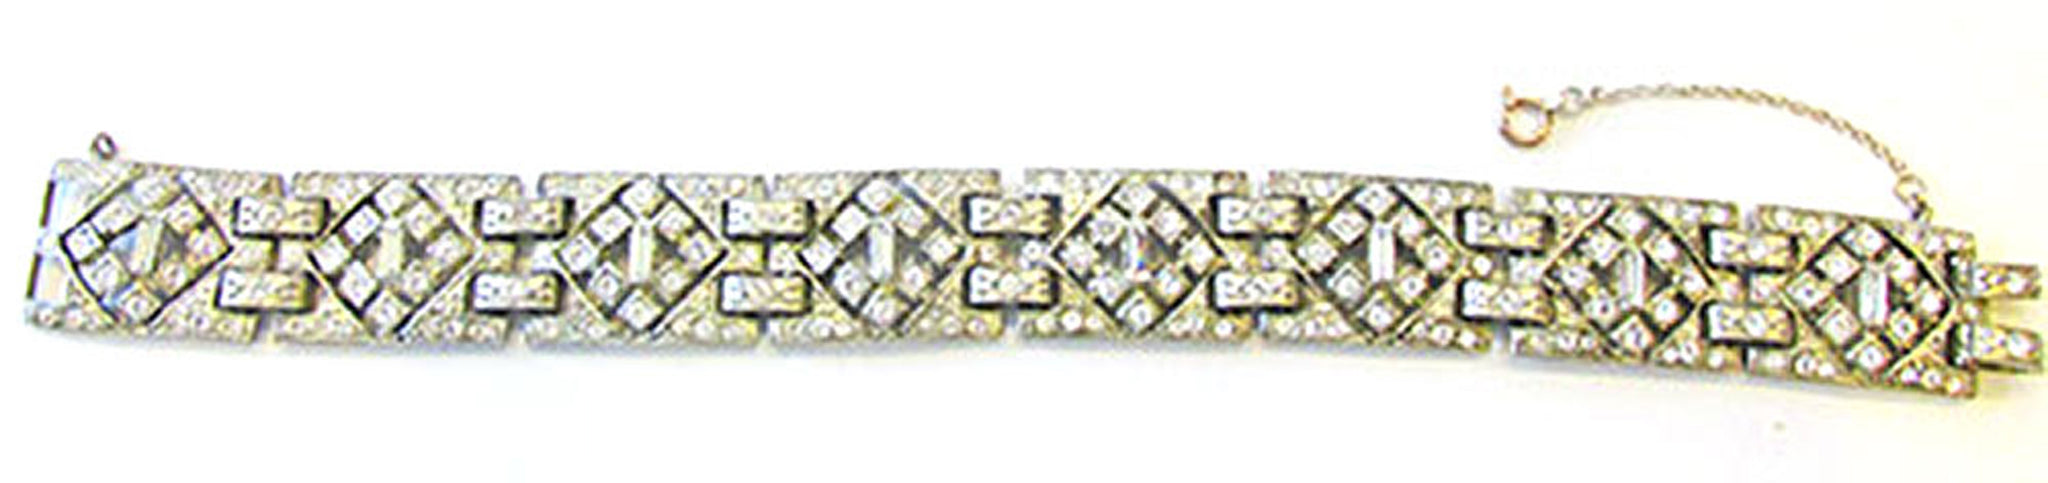 Vintage Jewelry Stunning 1930s Art Deco Diamante Link Bracelet - Front